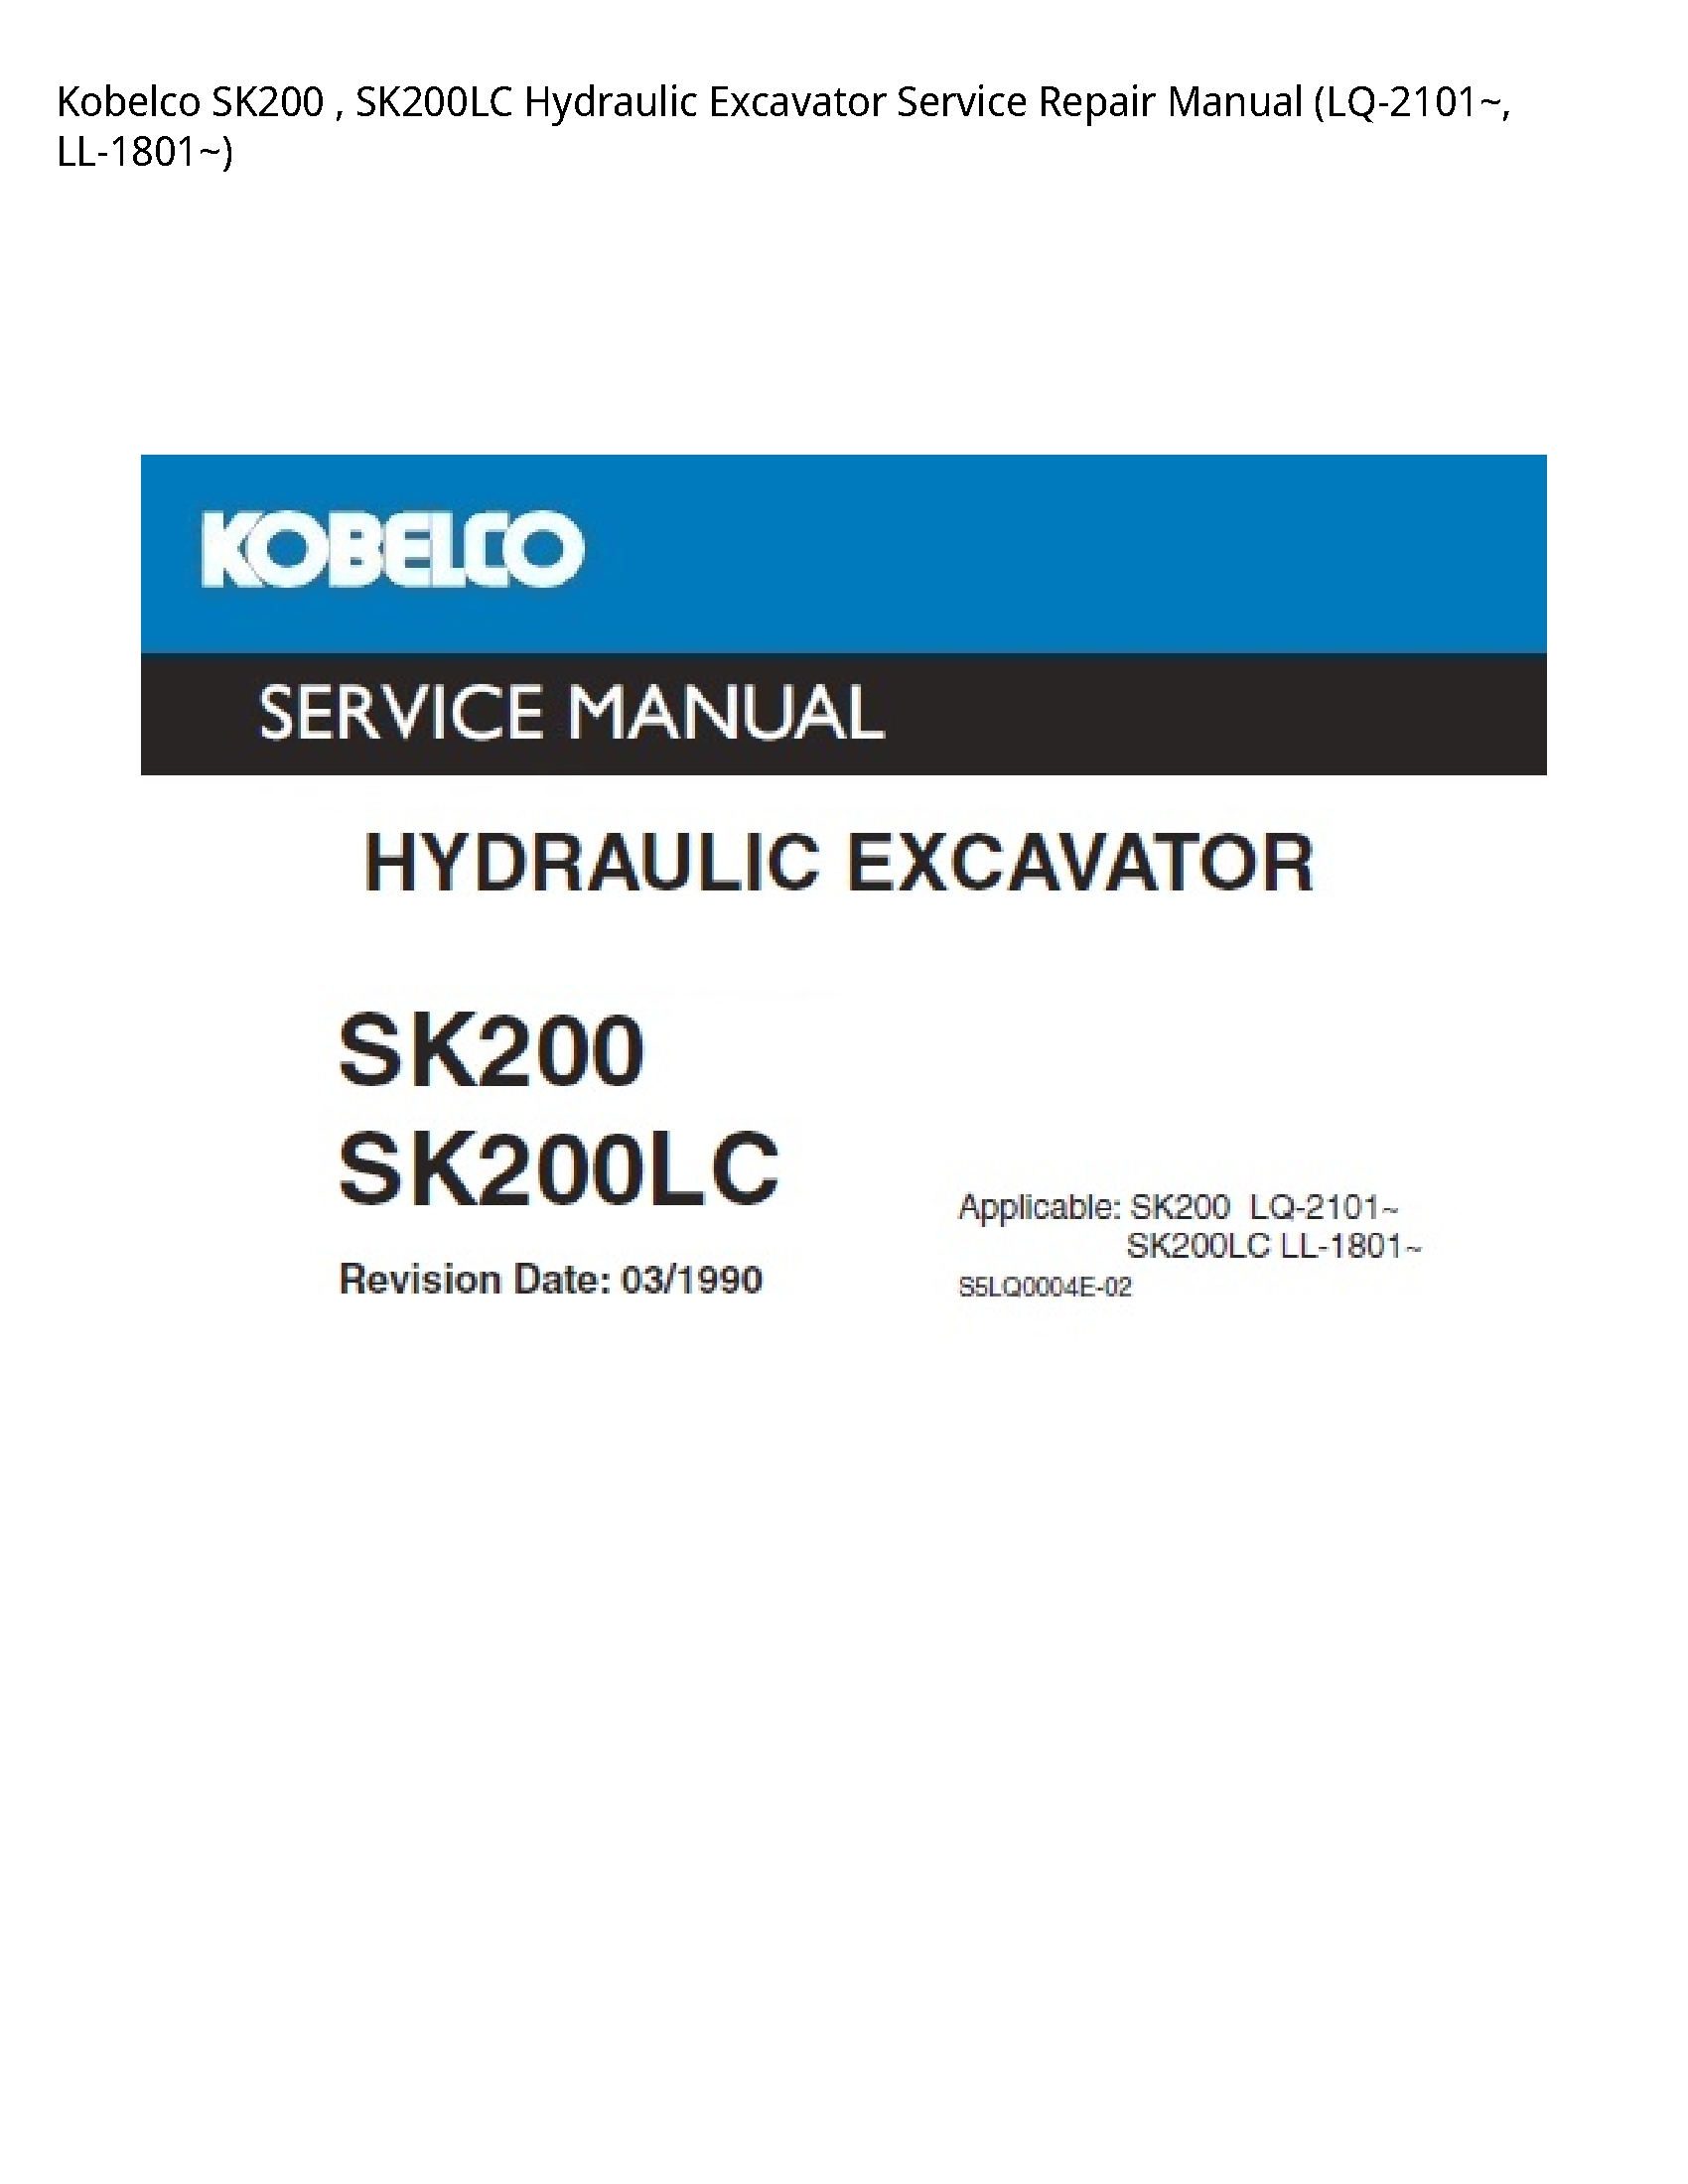 Kobelco SK200 Hydraulic Excavator manual